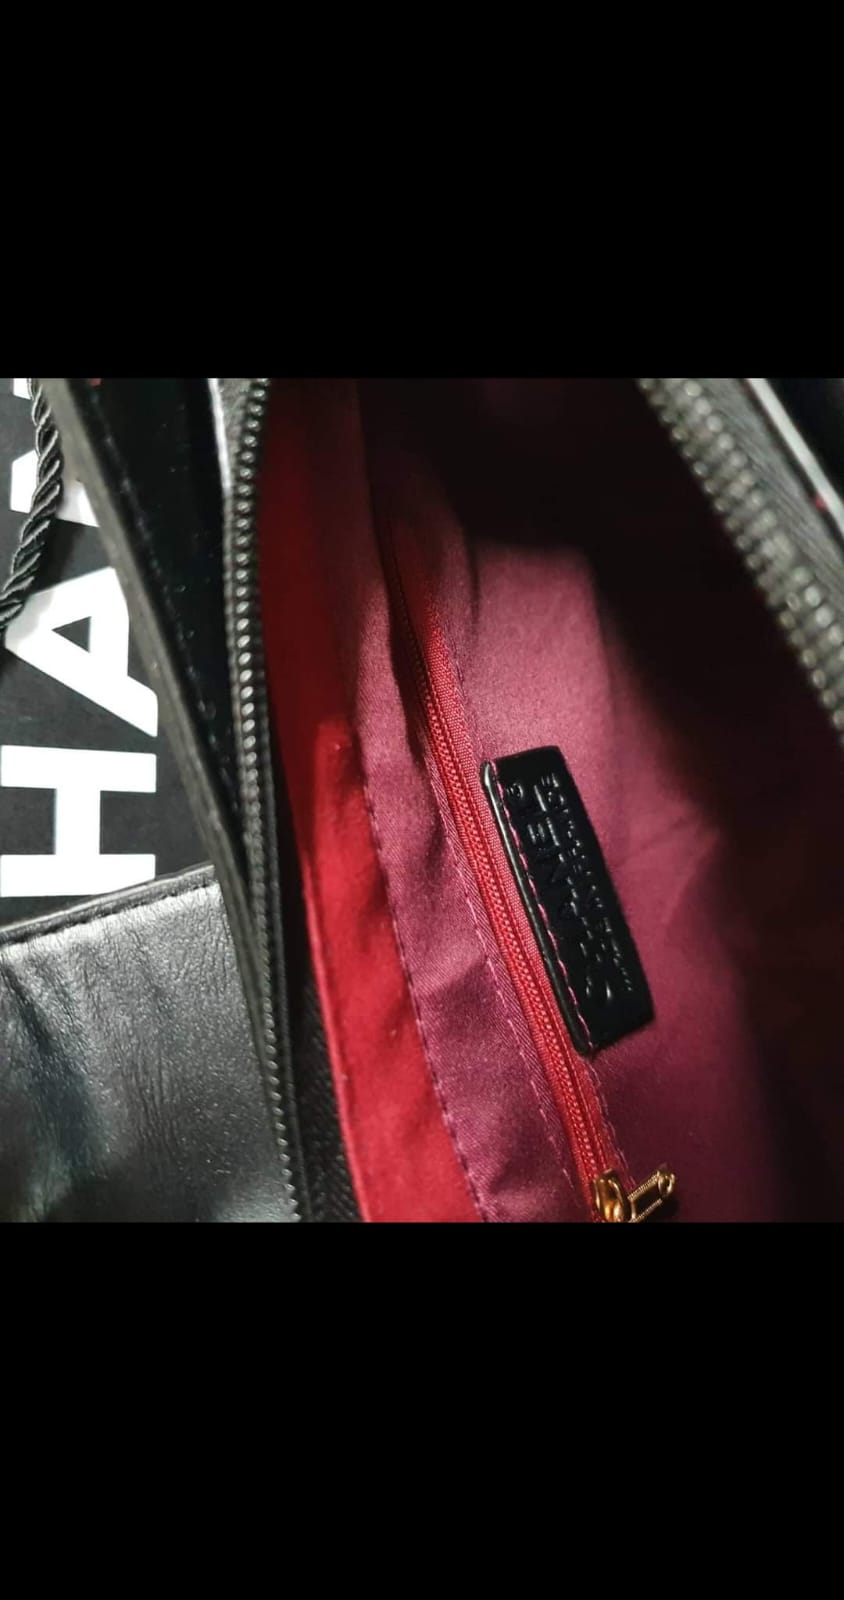 Chanel Strap Handbag